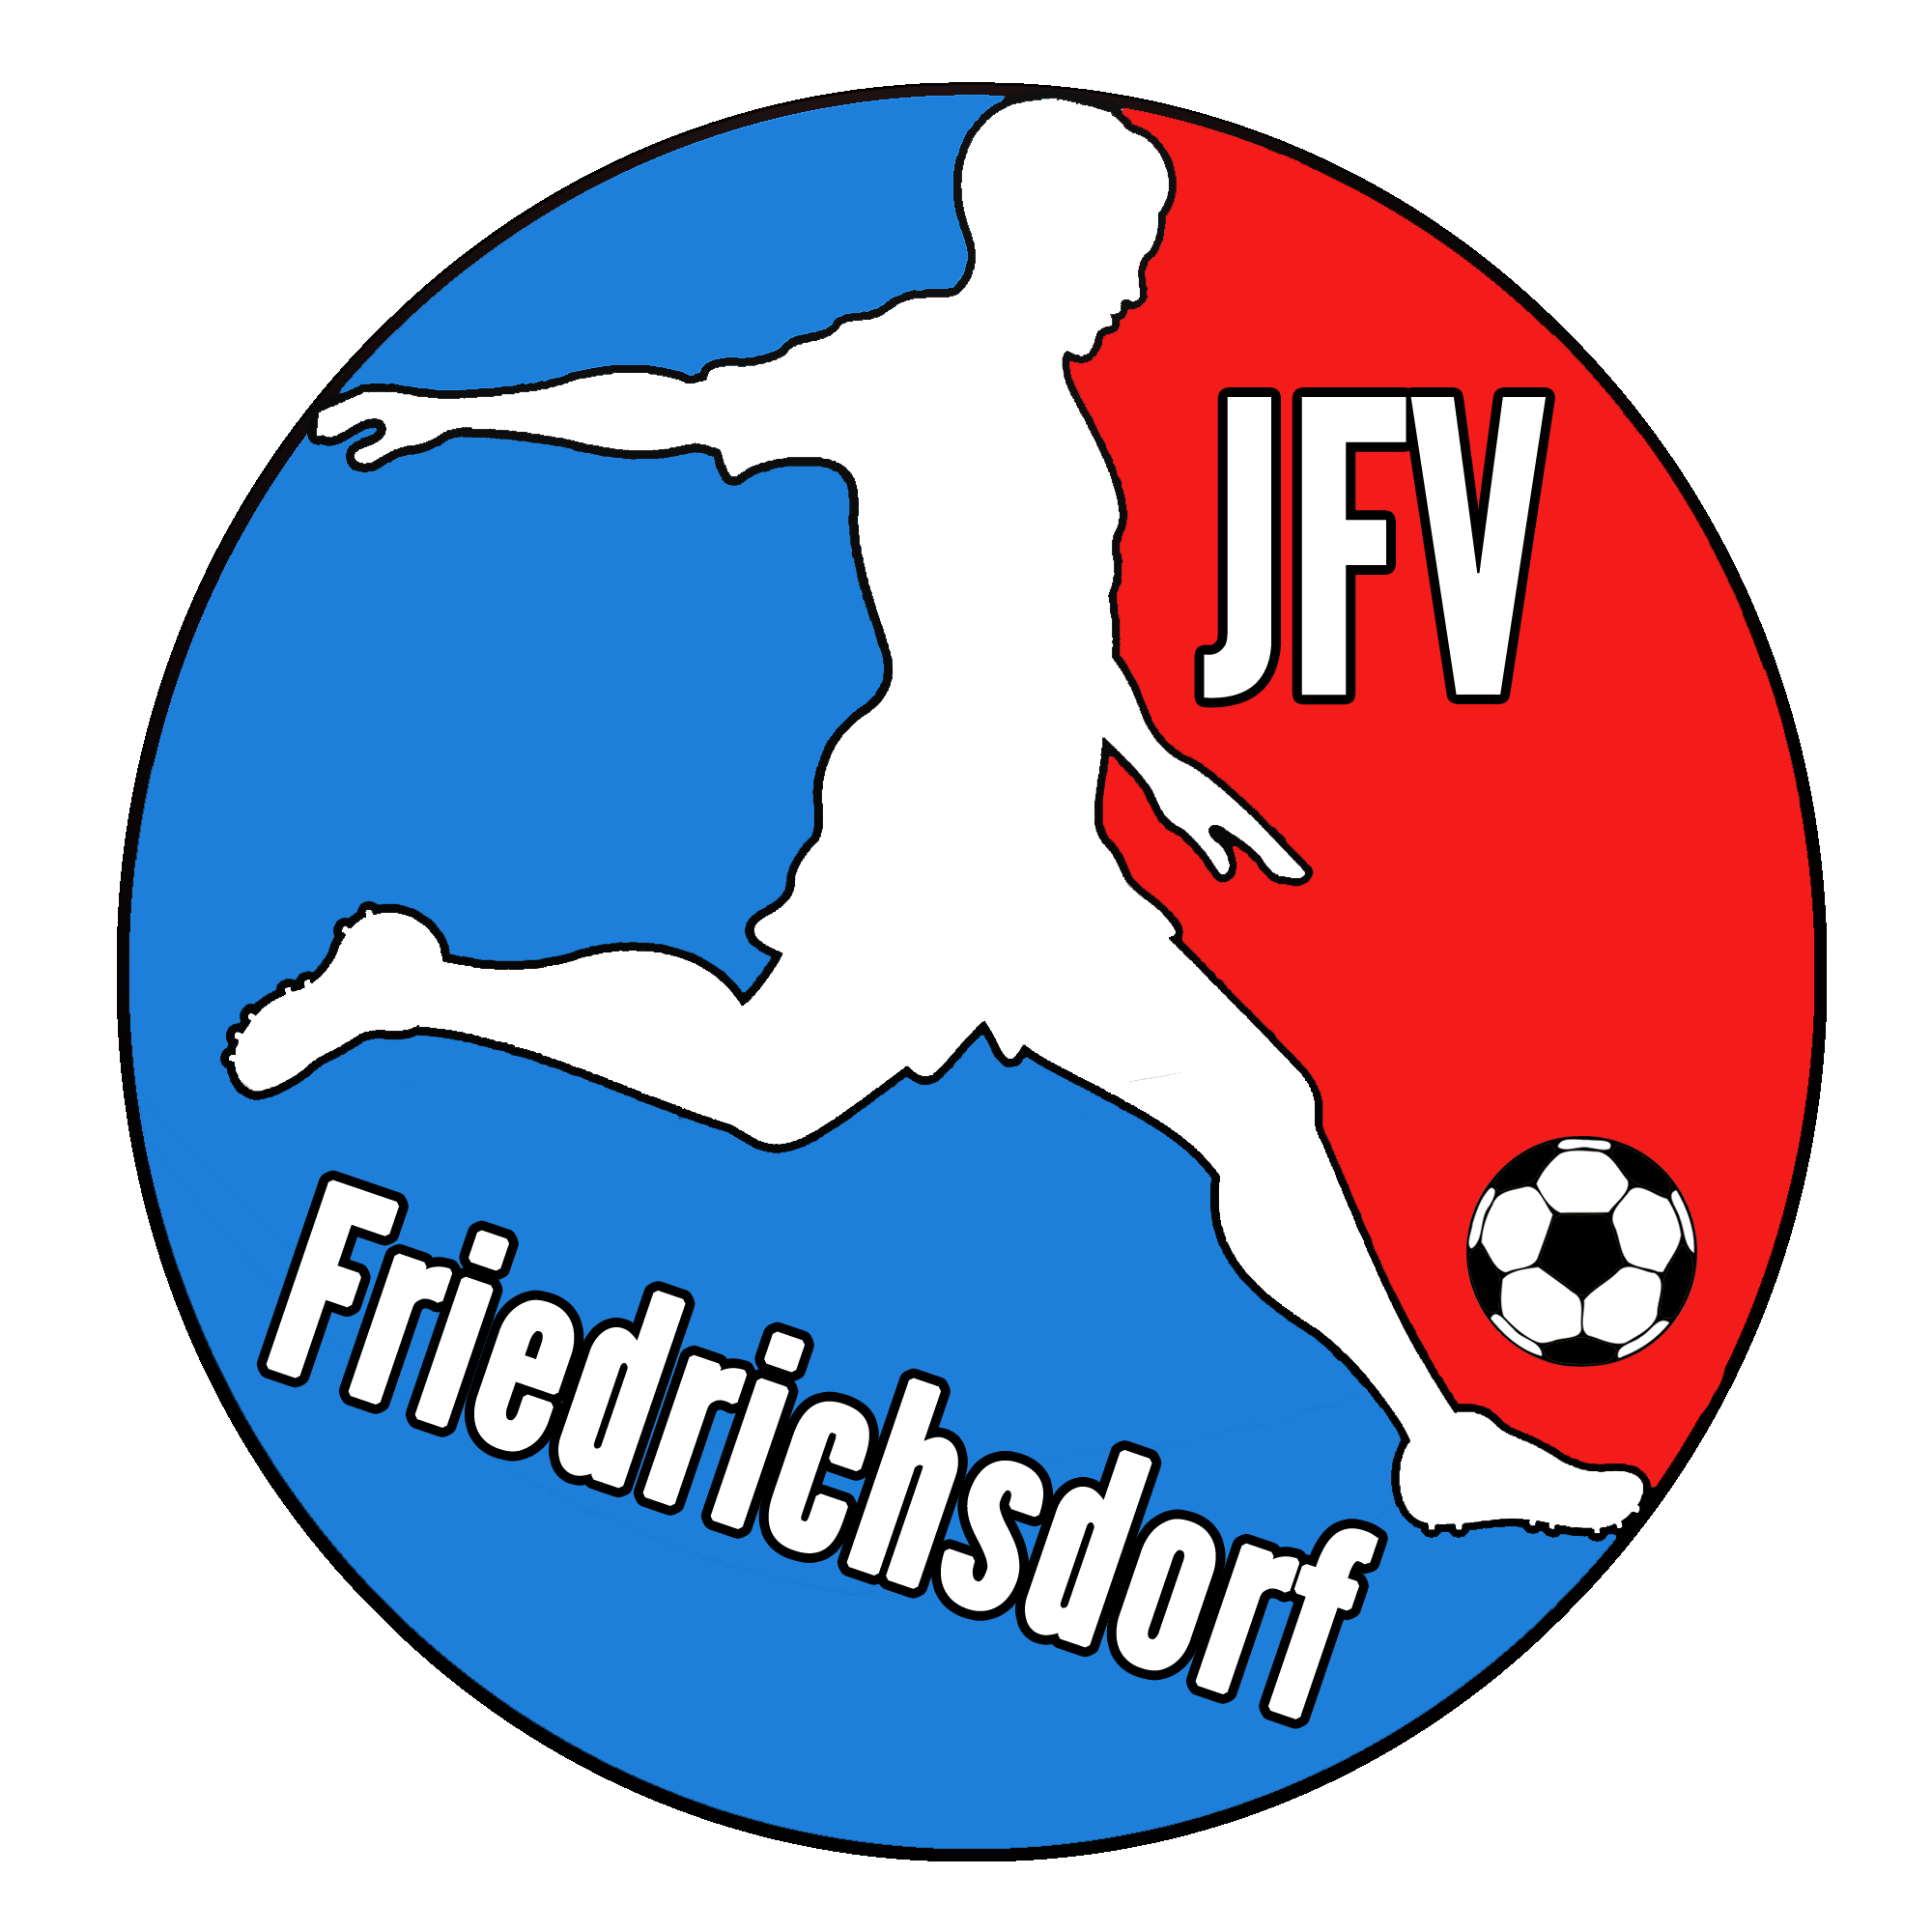 Vereinslogo von JFV Friedrichsdorf e.V.